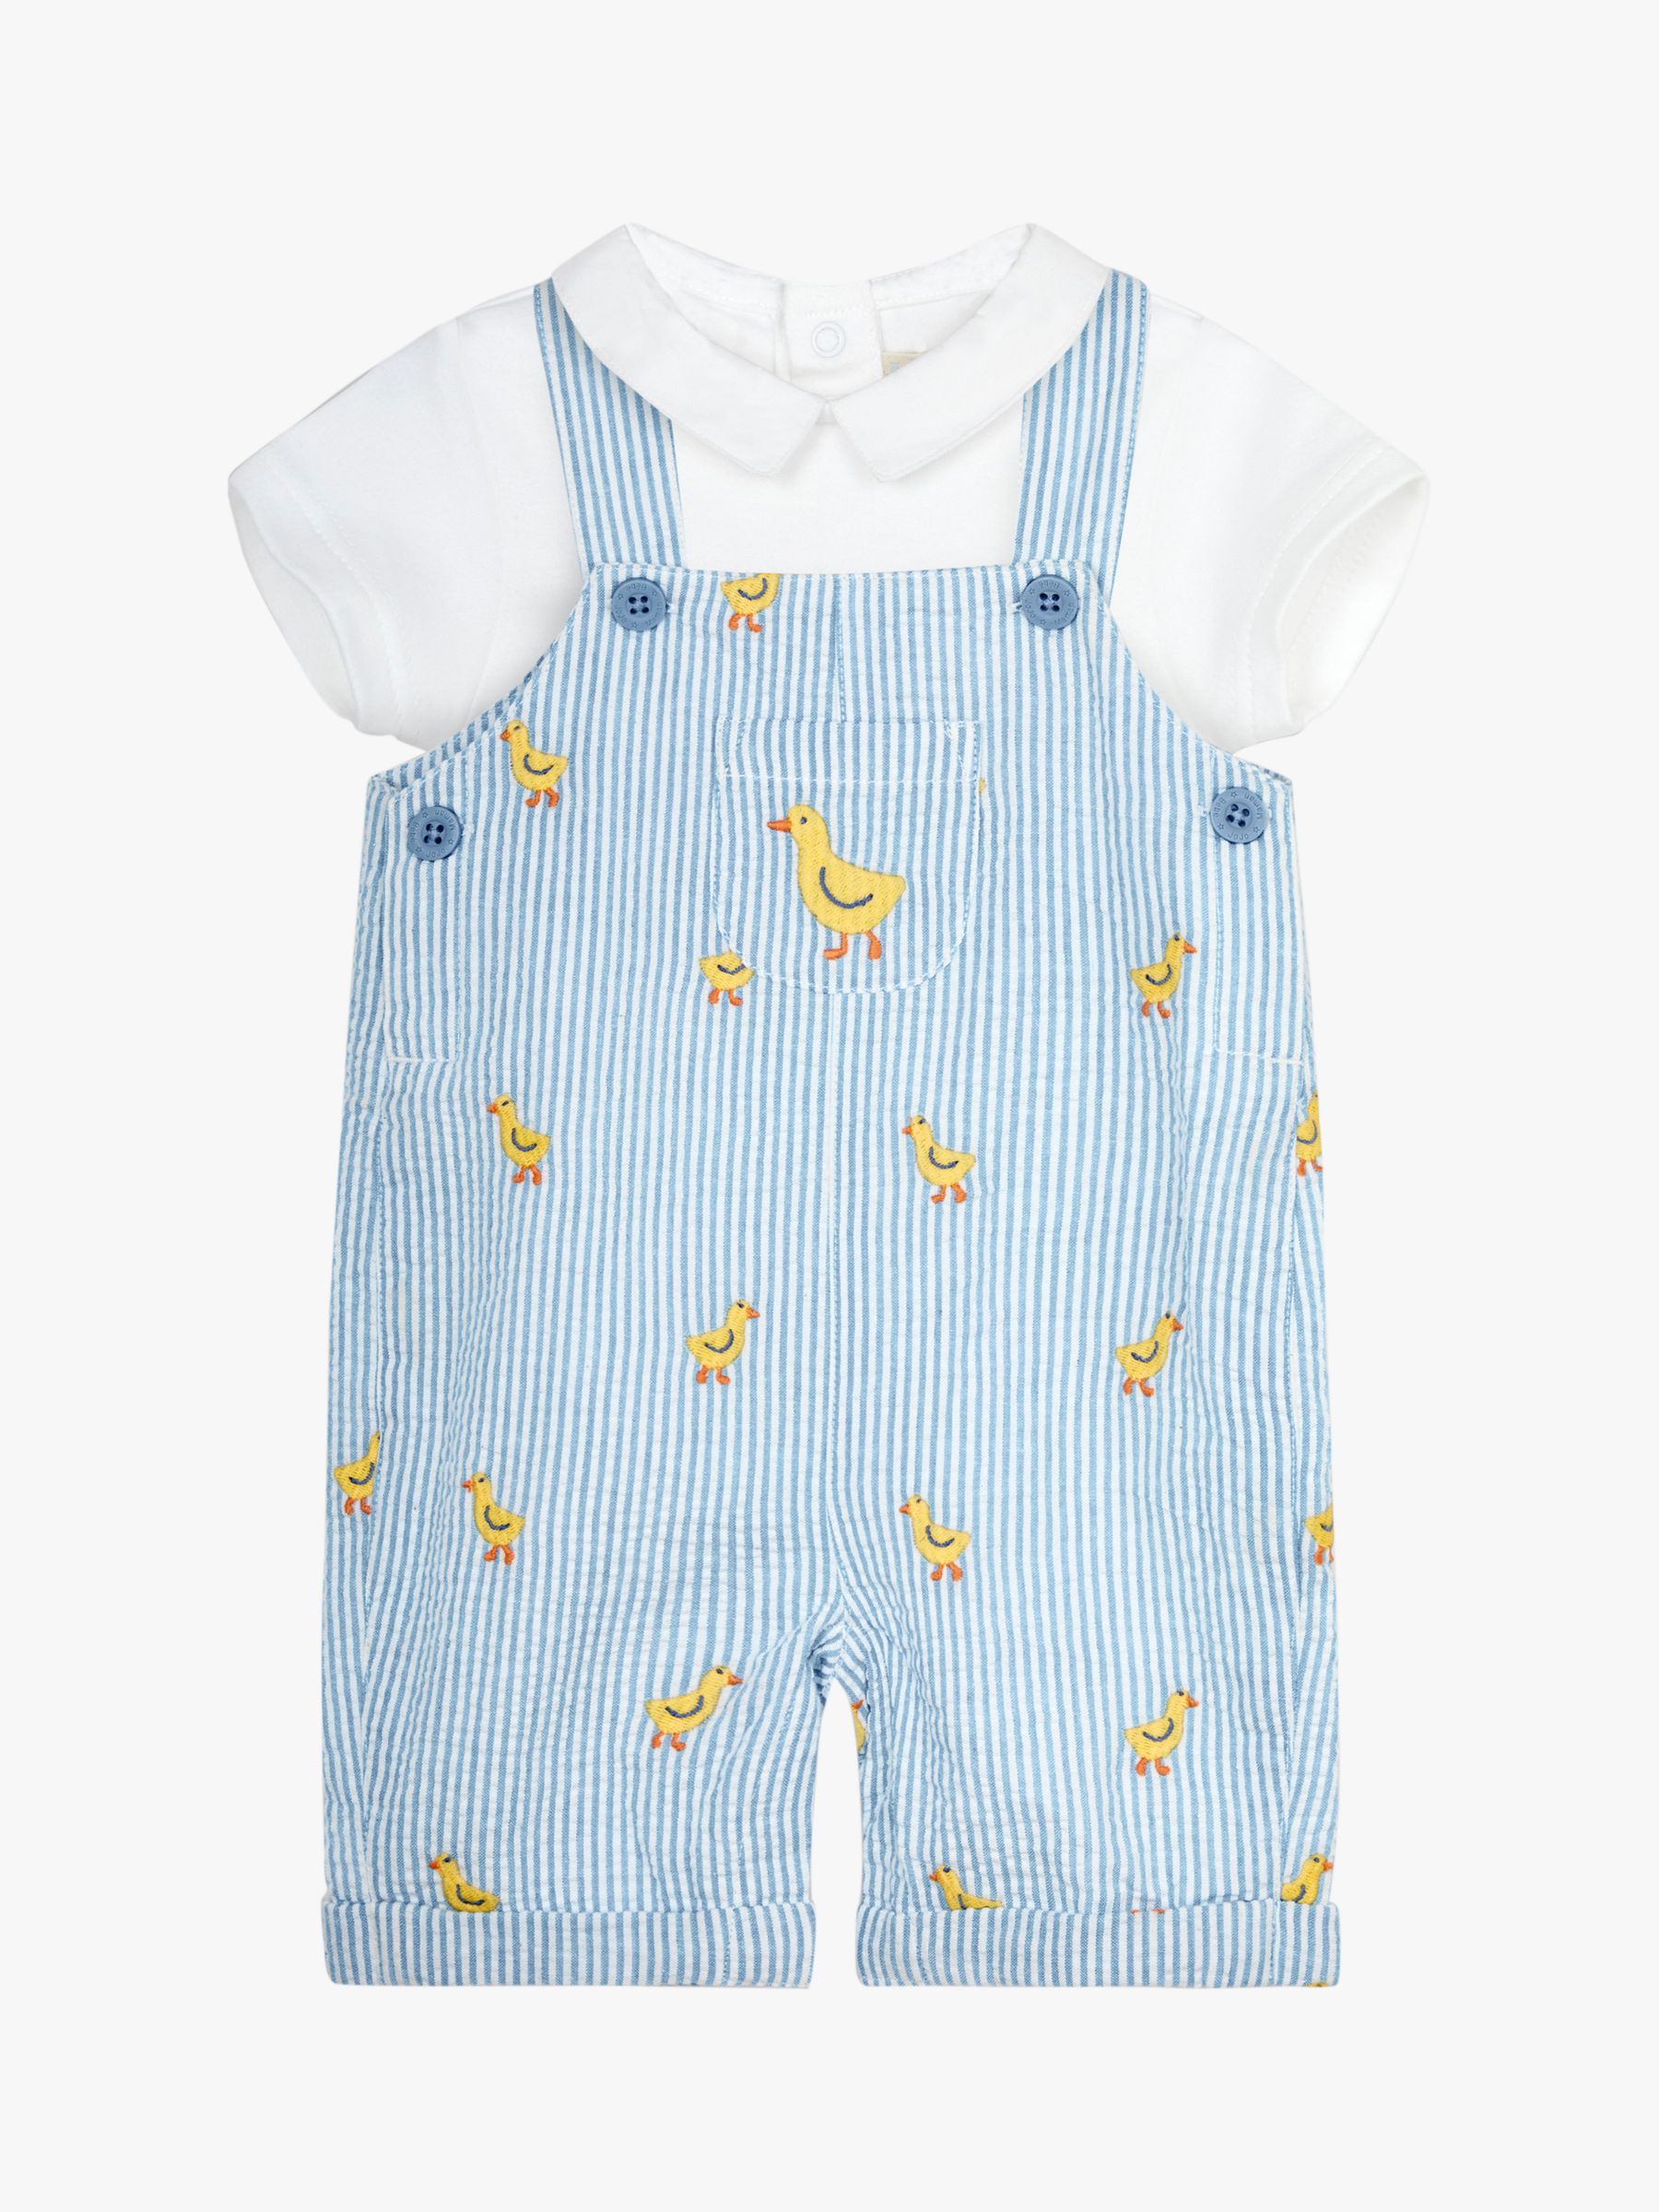 JoJo Maman Bébé Baby Chicks Embroidered Stripe Dungarees & Bodysuit Set, Blue/Multi, 18-24 months